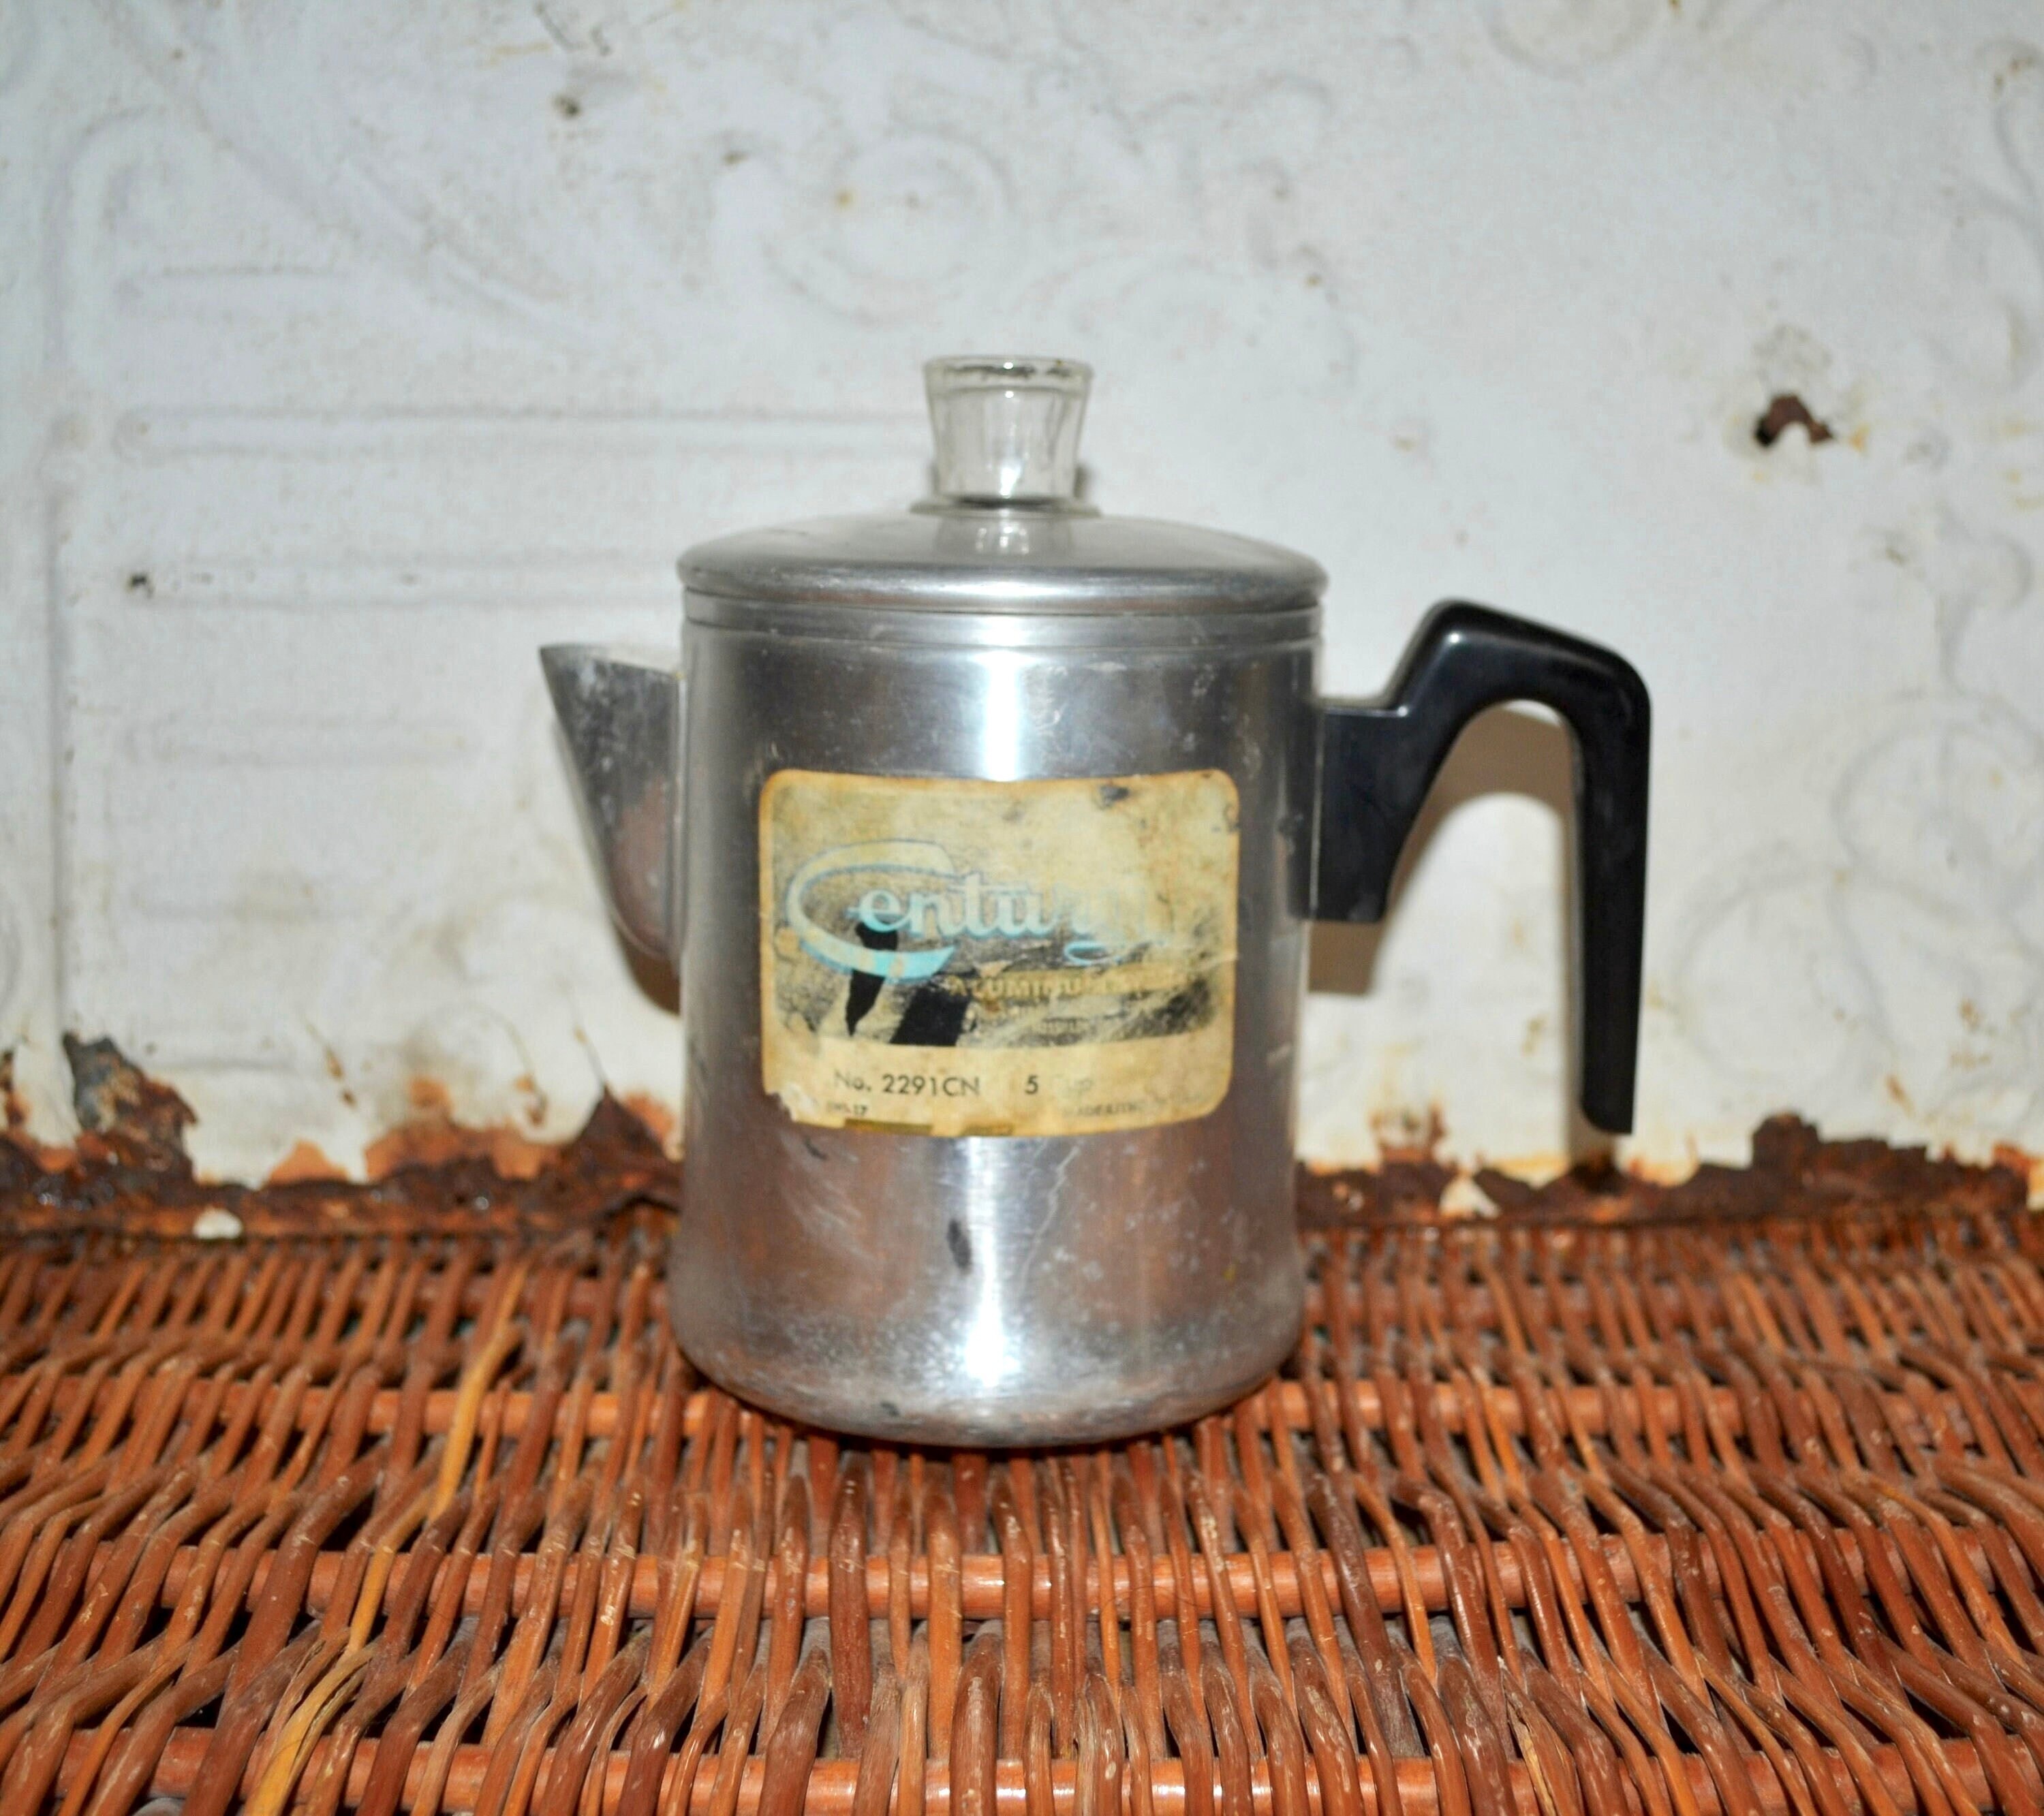 Bozeman Camping Coffee Pot – Coffee Percolator